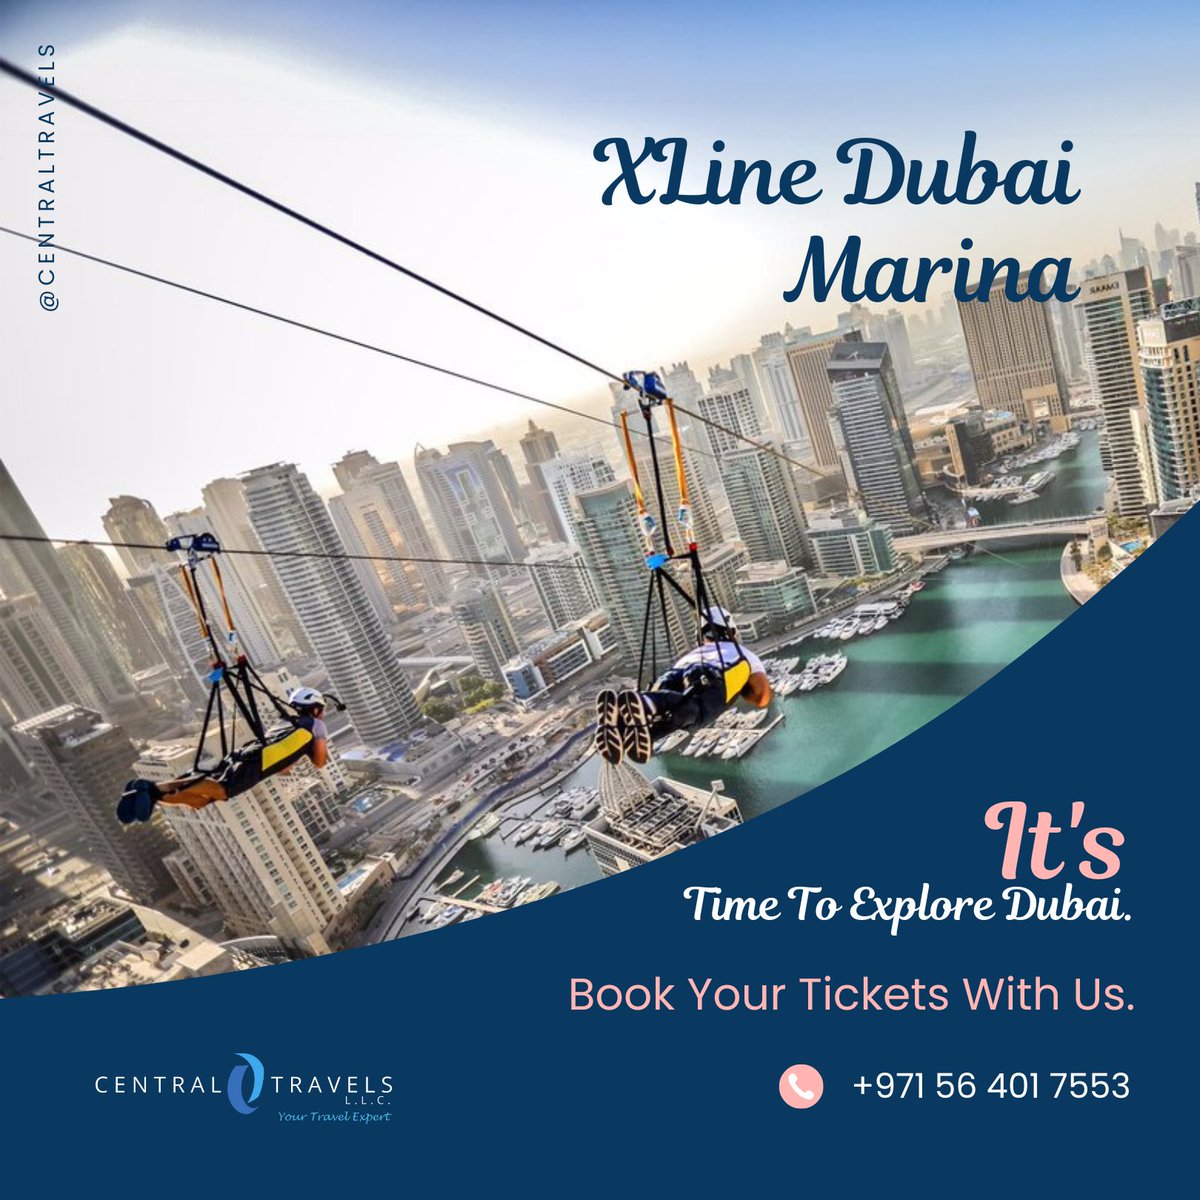 Let's Book Tickets for The Longest Urban #zipline At Dubai Marina & Get Amazing Experience!!🤩
.
.
.
.
#Centraltravelsuae #tourism #dubai #vacations #familytrips #tours #exploreworld #travelwithus #Xlinedubai #ziplineadventure #xlinedubaimarina #dubaiadventure #thingstodoindubai